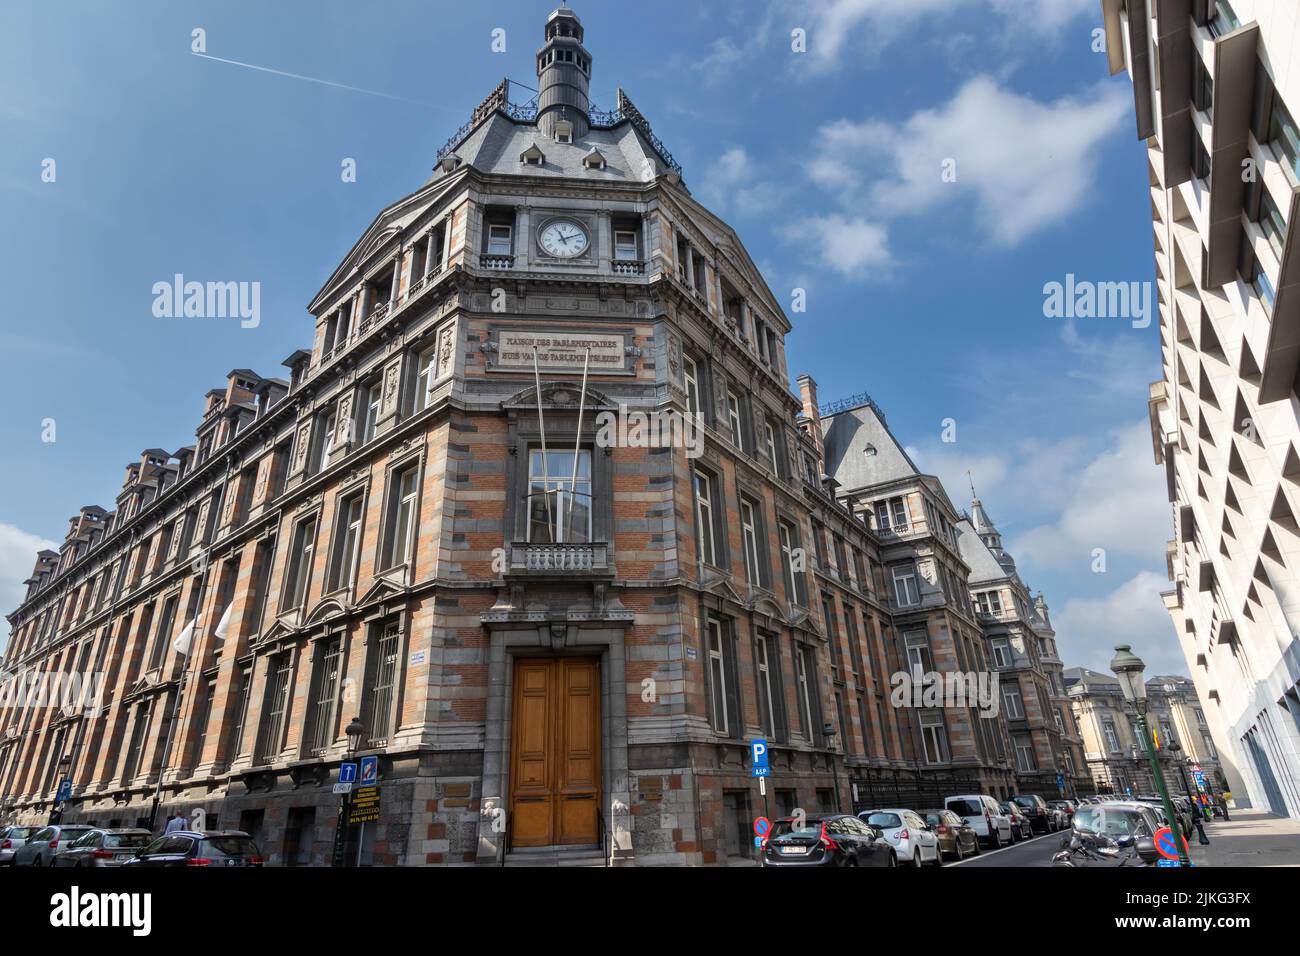 Maison des parlementaires (House of parliamentarians), Brussels, Belgium Stock Photo